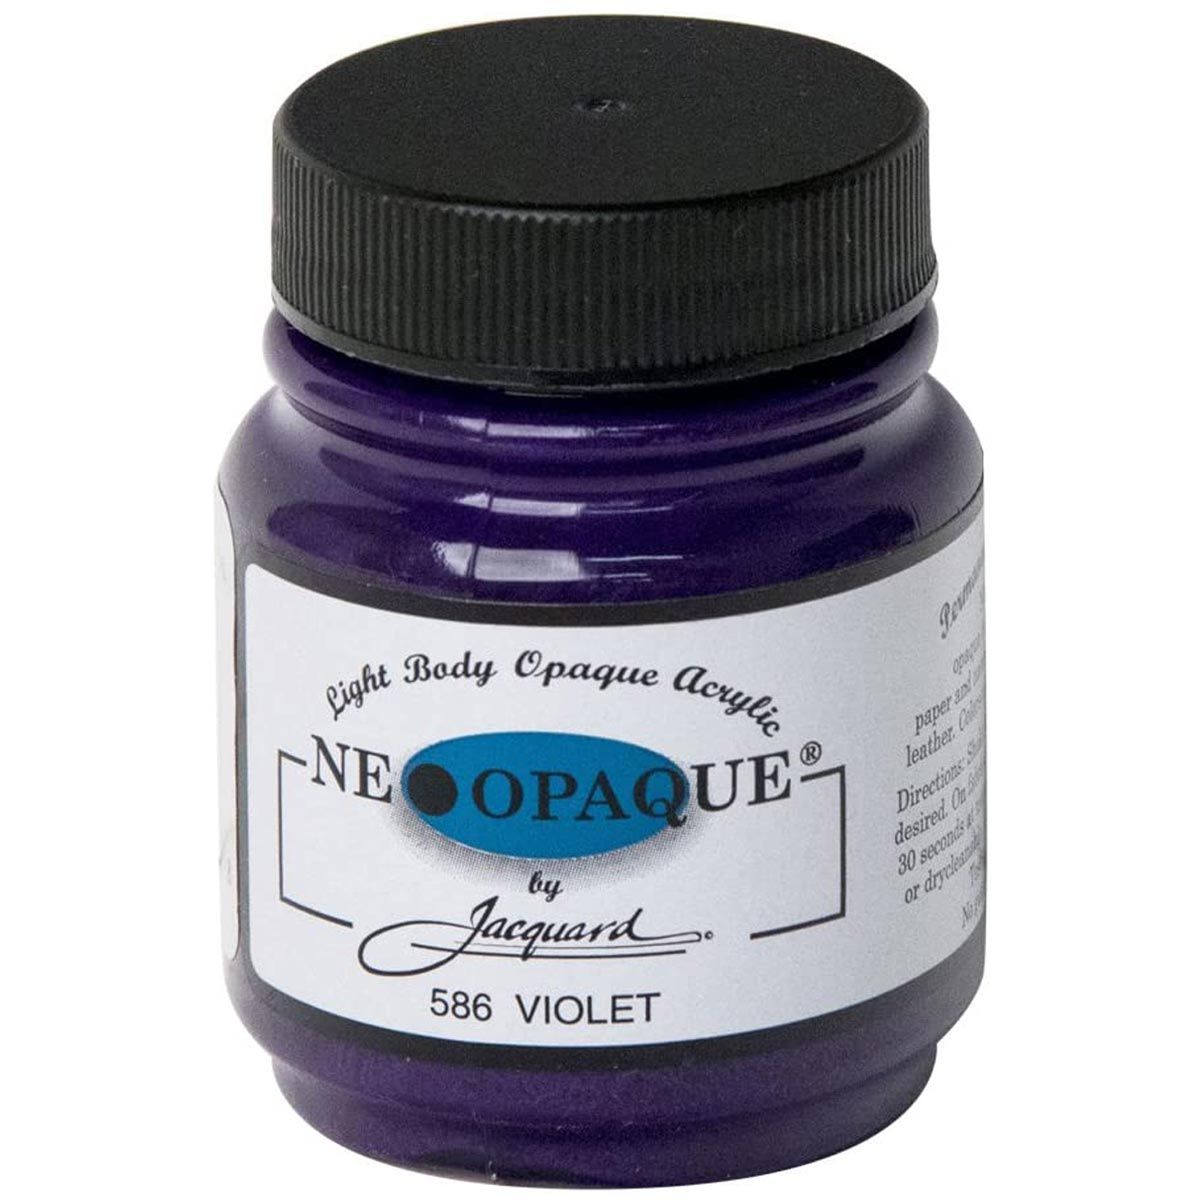 Jacquard Neopaque Acrylic 586 Violet 2.25 oz